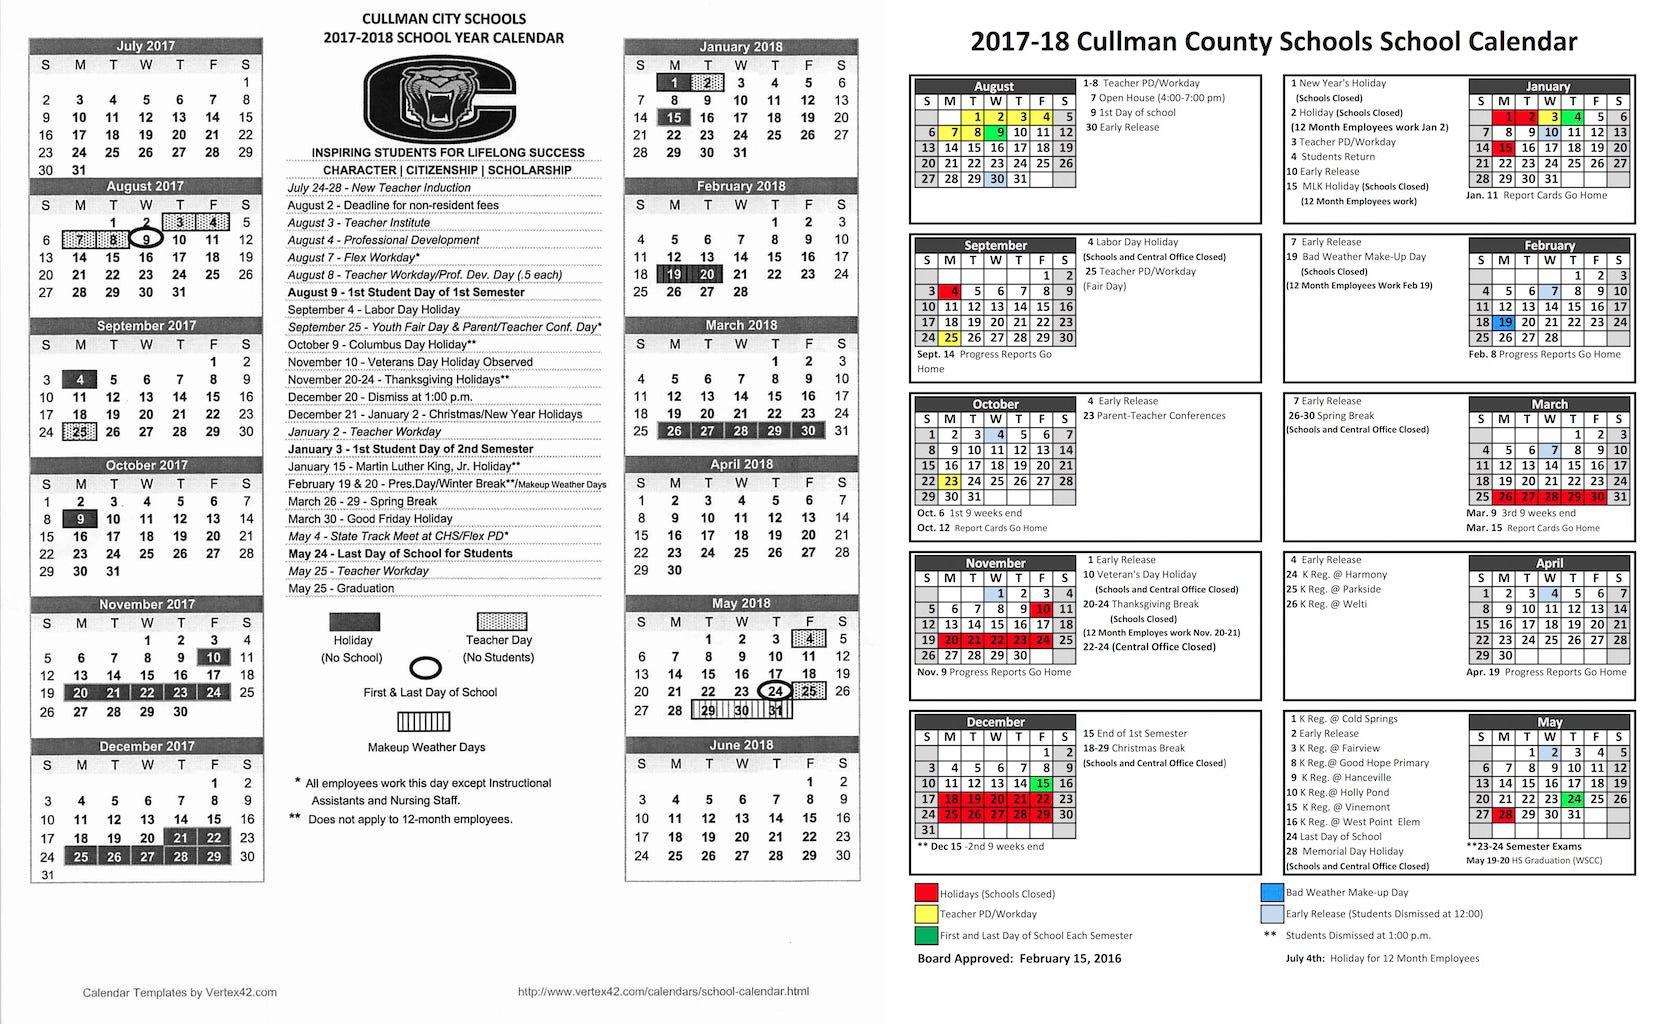 SCHOOL DAYS 20172018 Calendars for Cullman County, City Schools